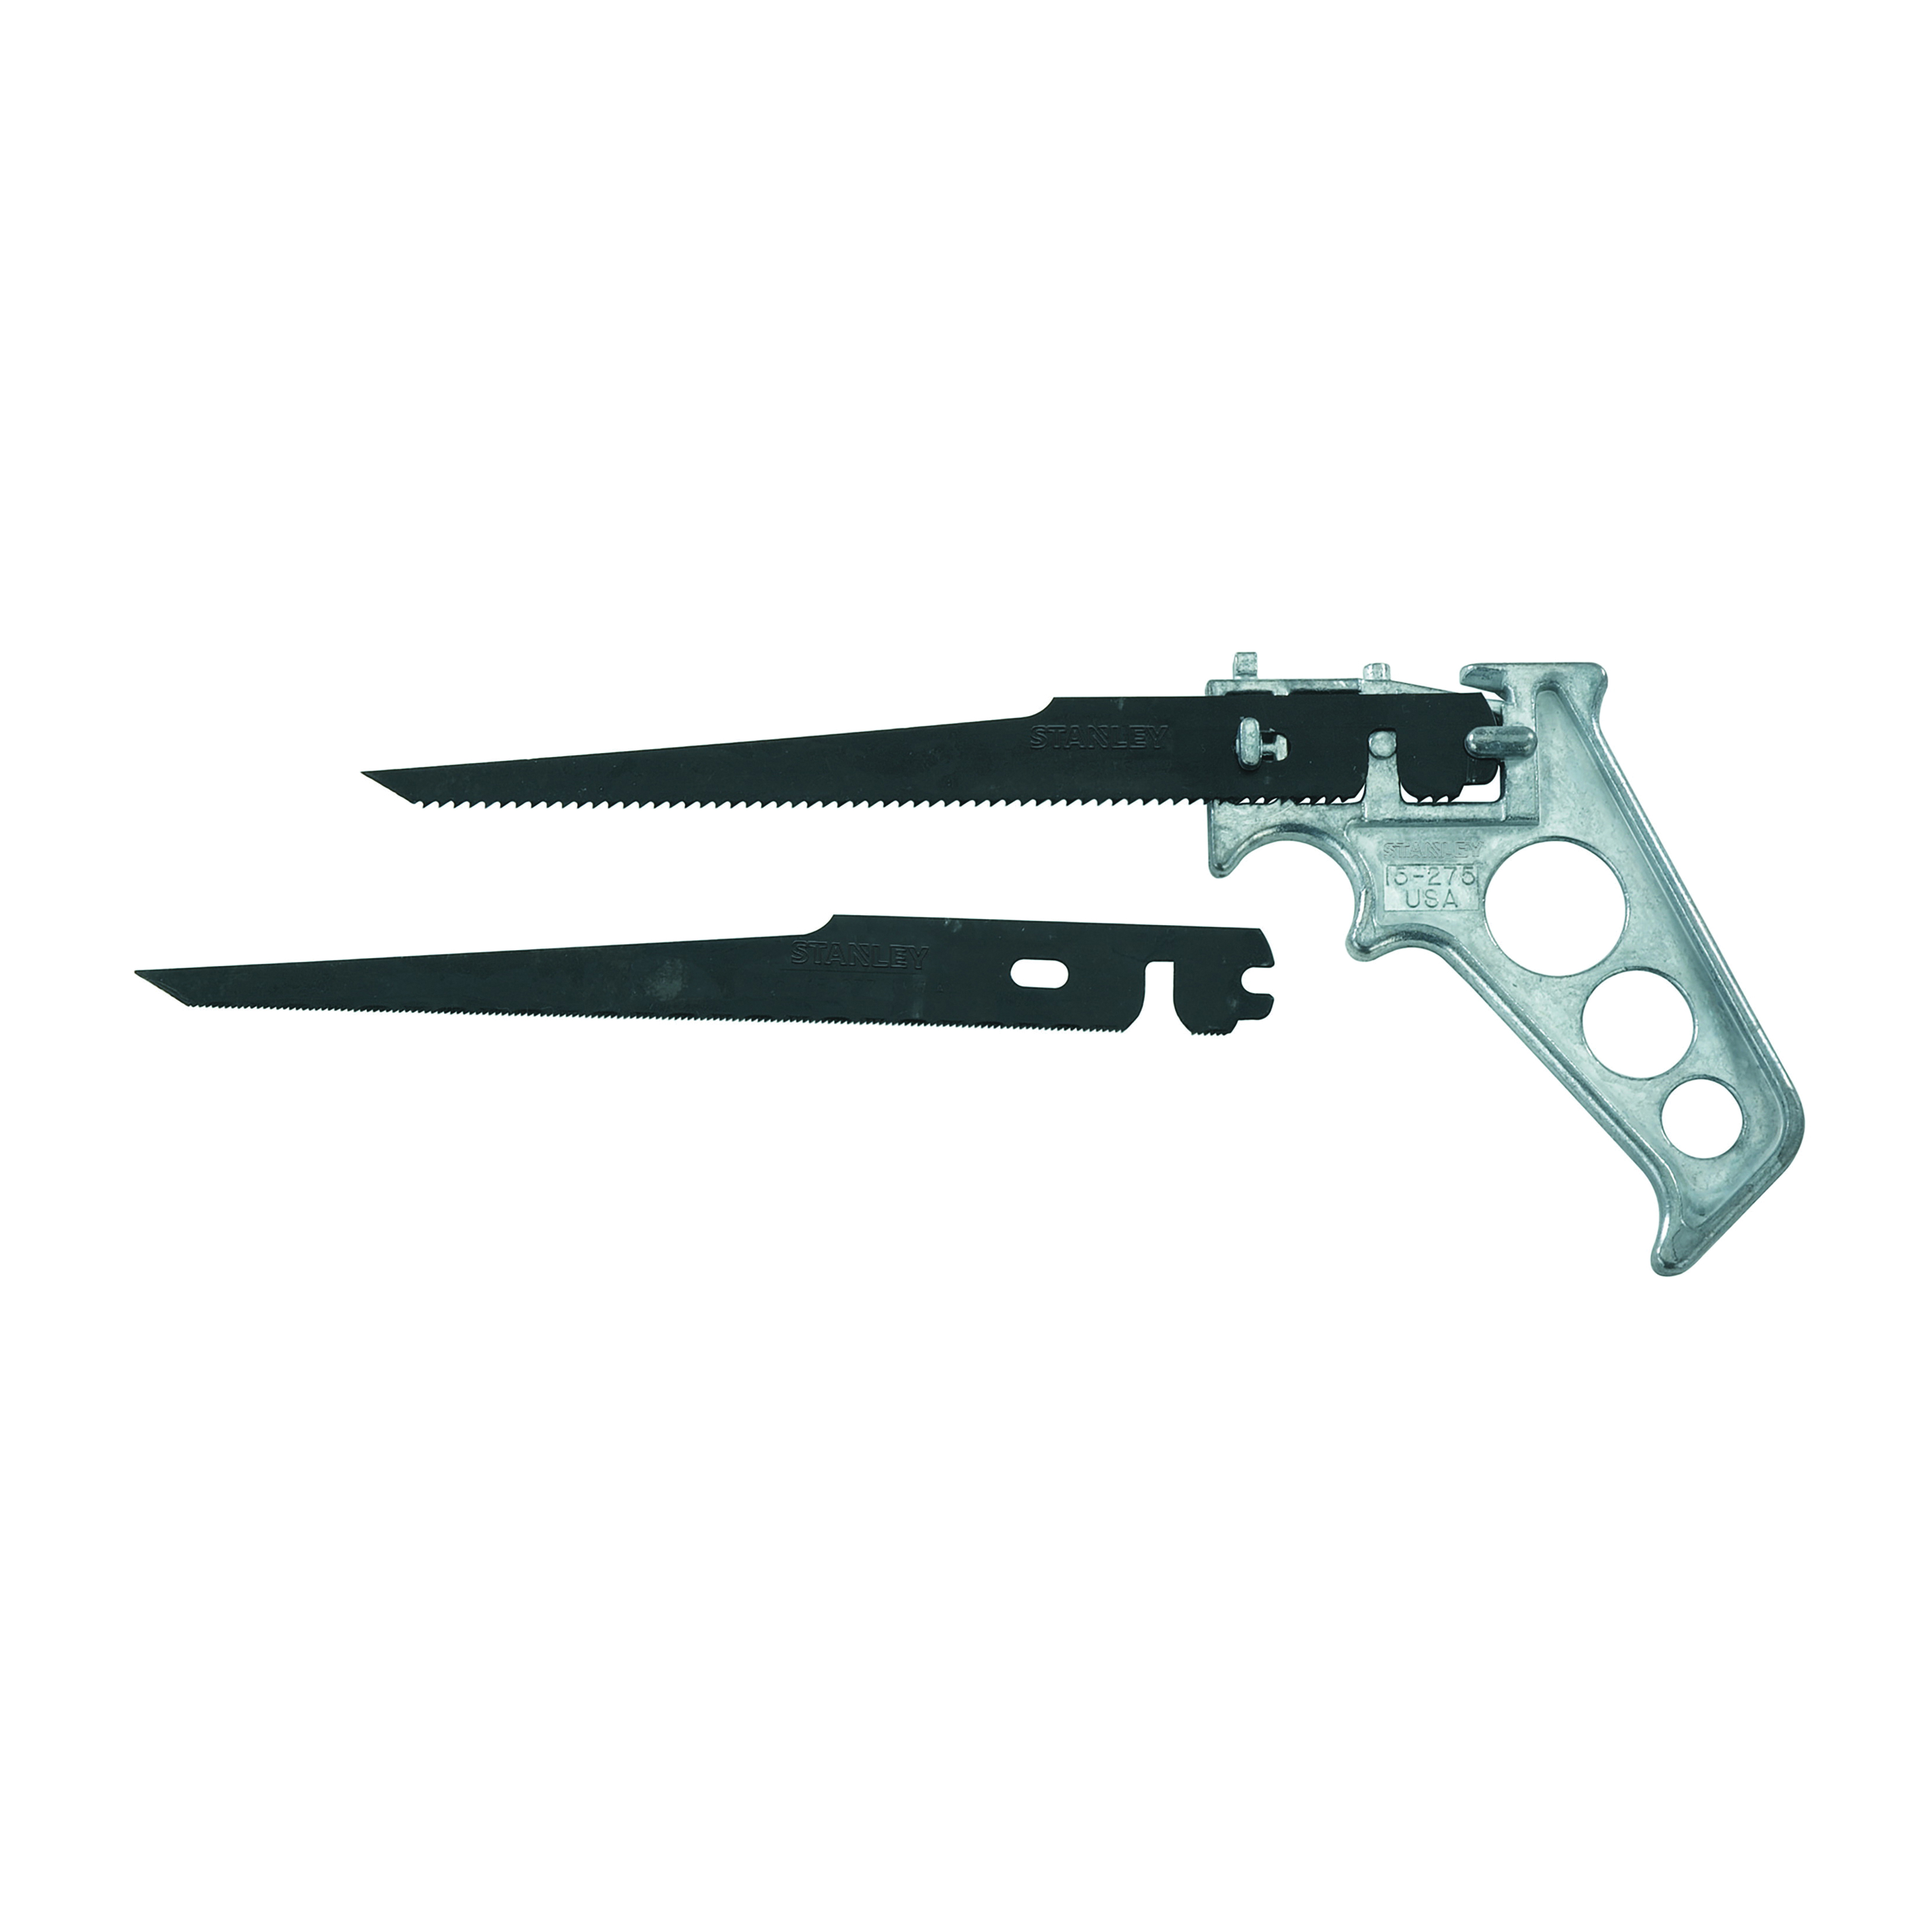 Stanley® 15-265 Adjustable Hacksaw, 10 in L Carbon Steel Blade, 3-7/8 in D Throat